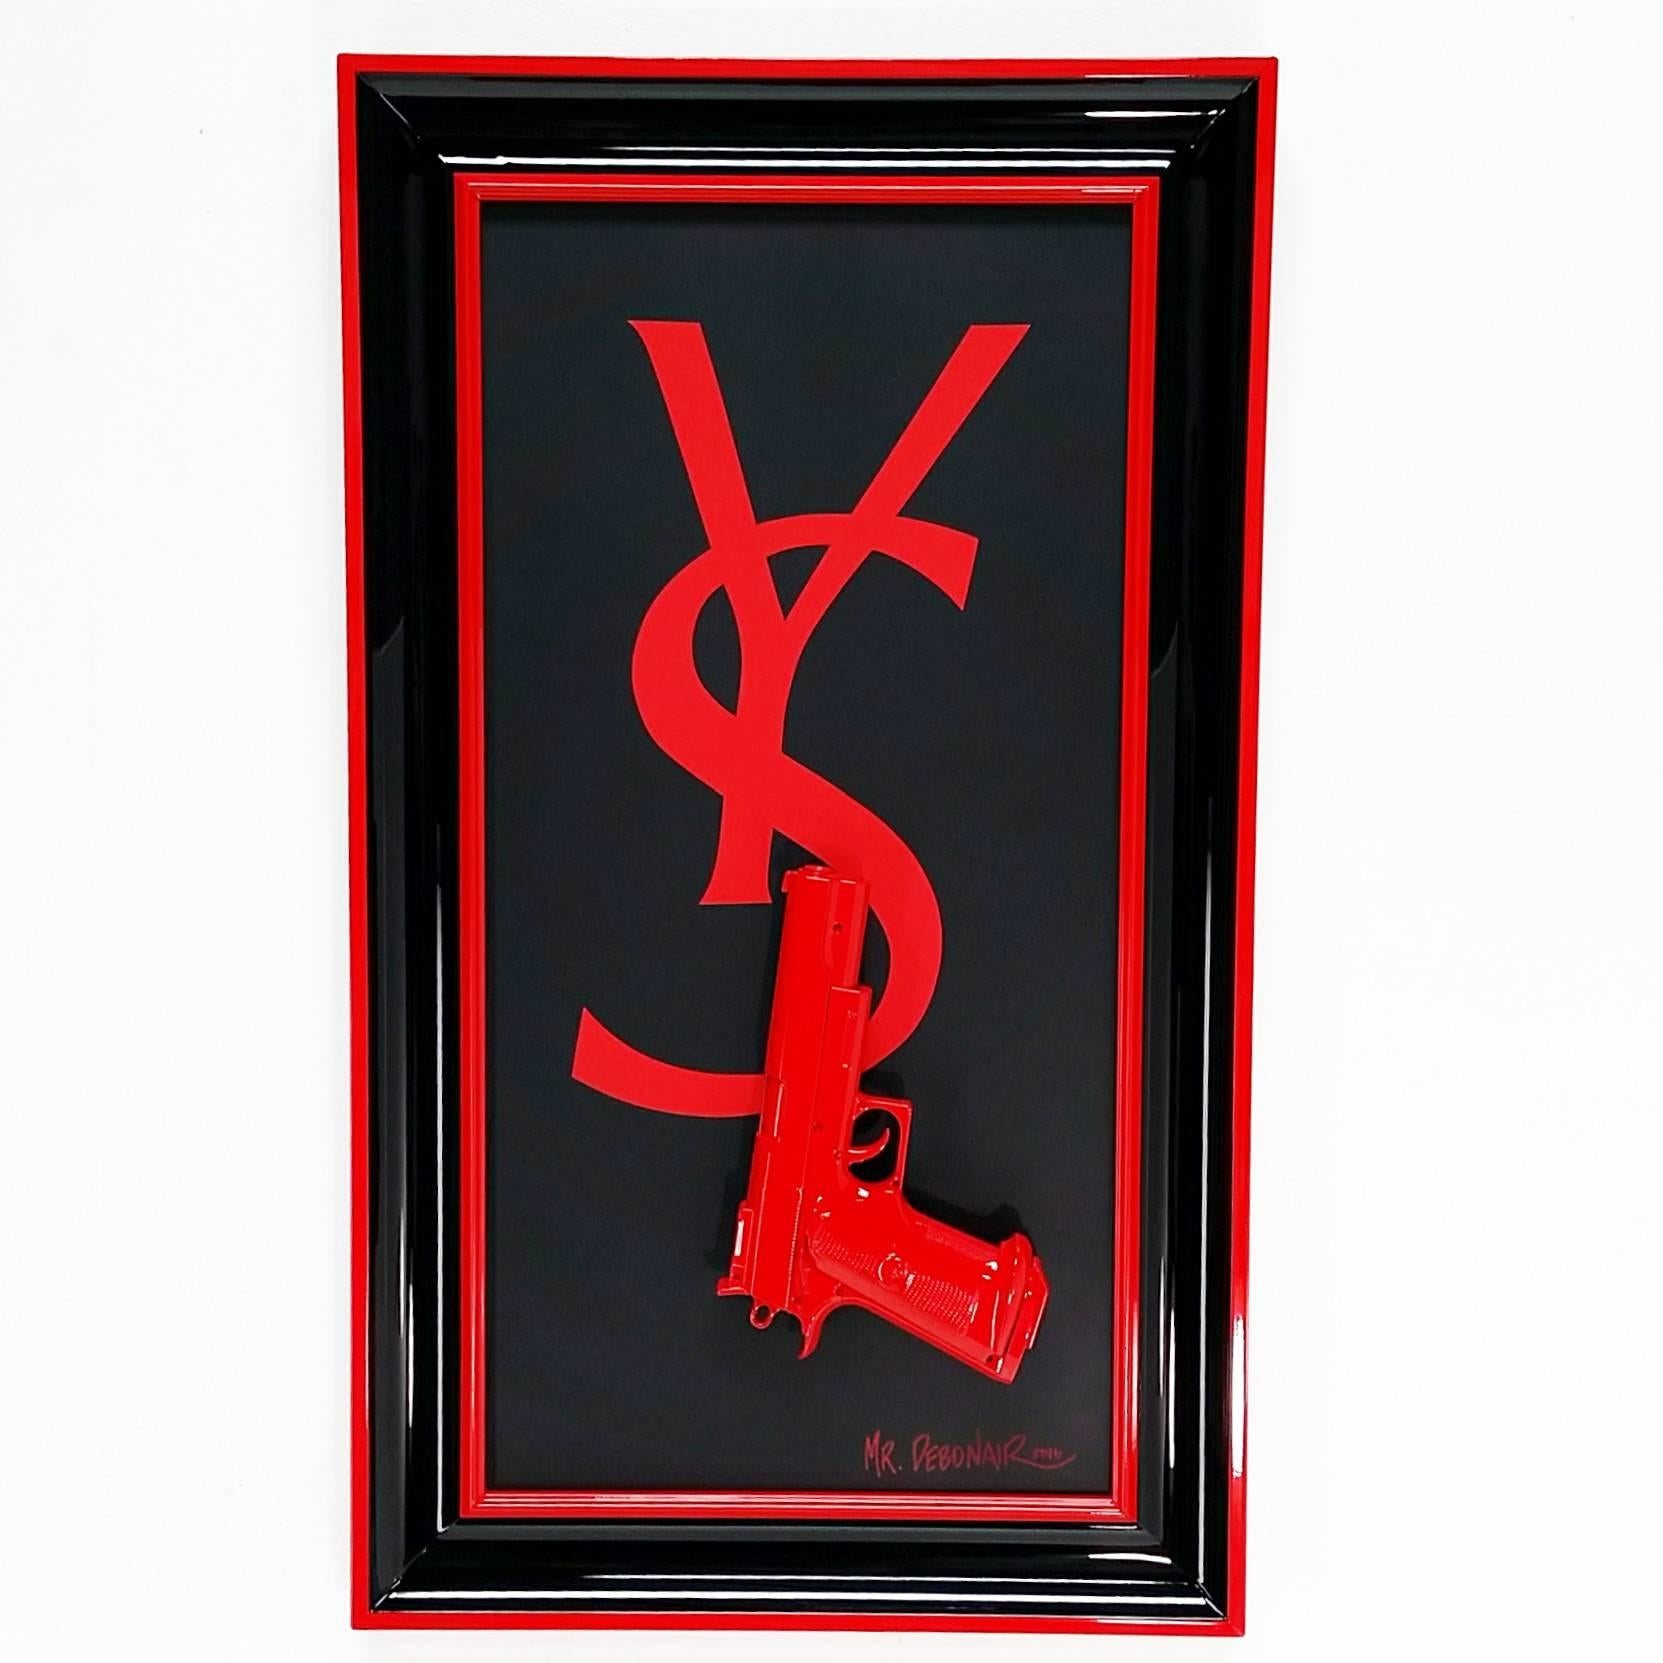 Yves Saint Laurent Gun - Mixed Media Art by Mr Debonair